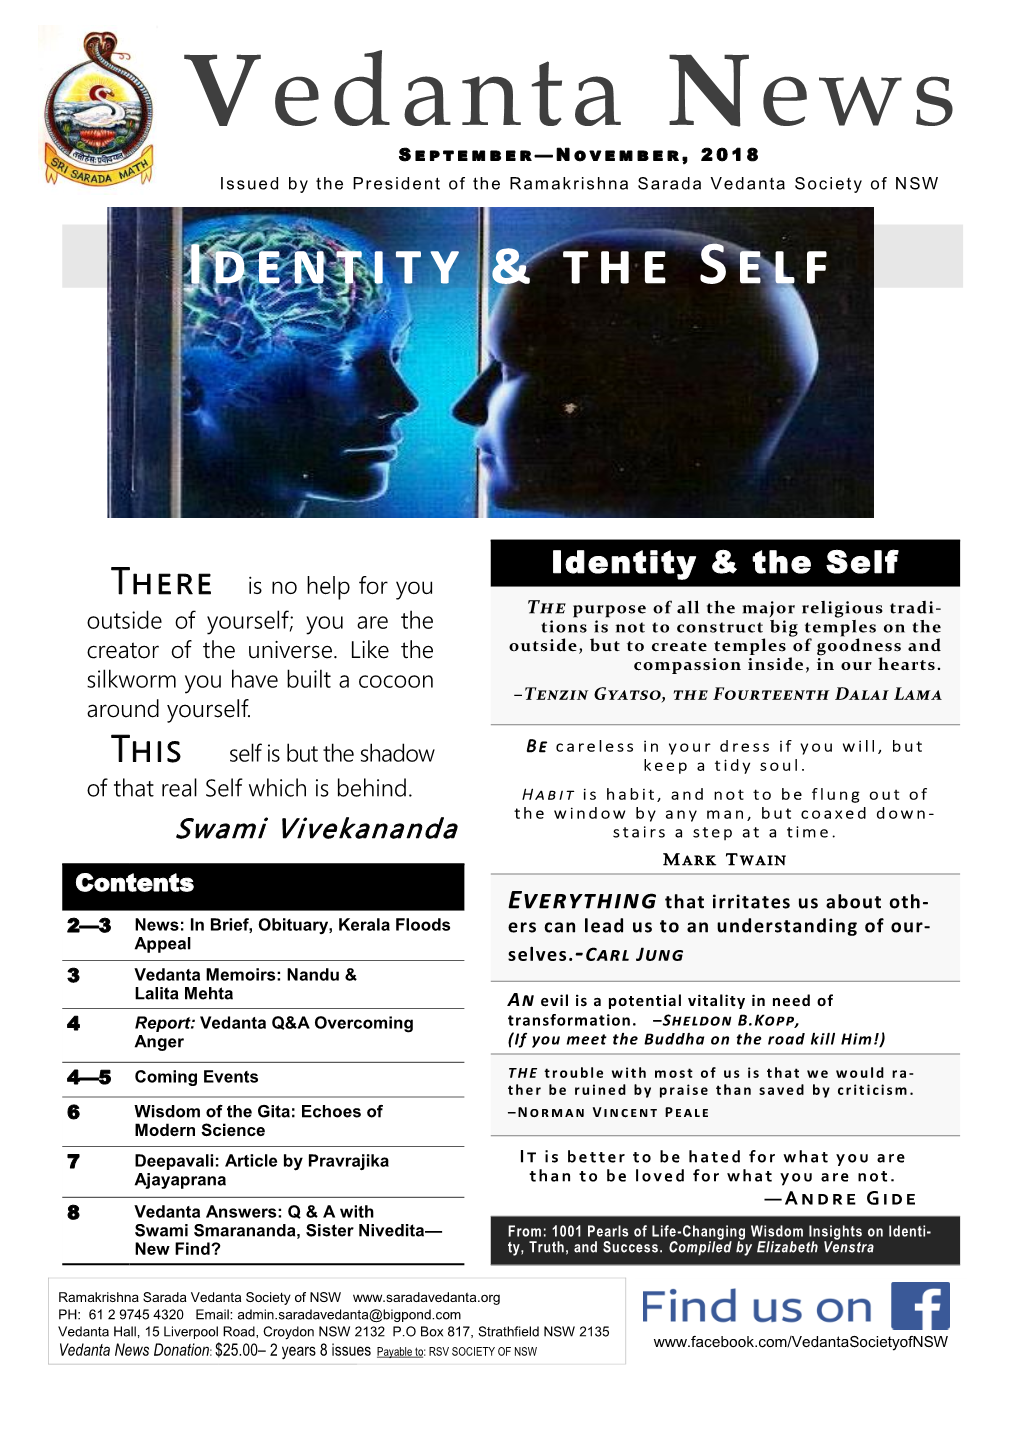 Vedanta News S E P T E M B E R — November, 2018 Issued by the President of the Ramakrishna Sarada Vedanta Society of NSW Identity & the Self